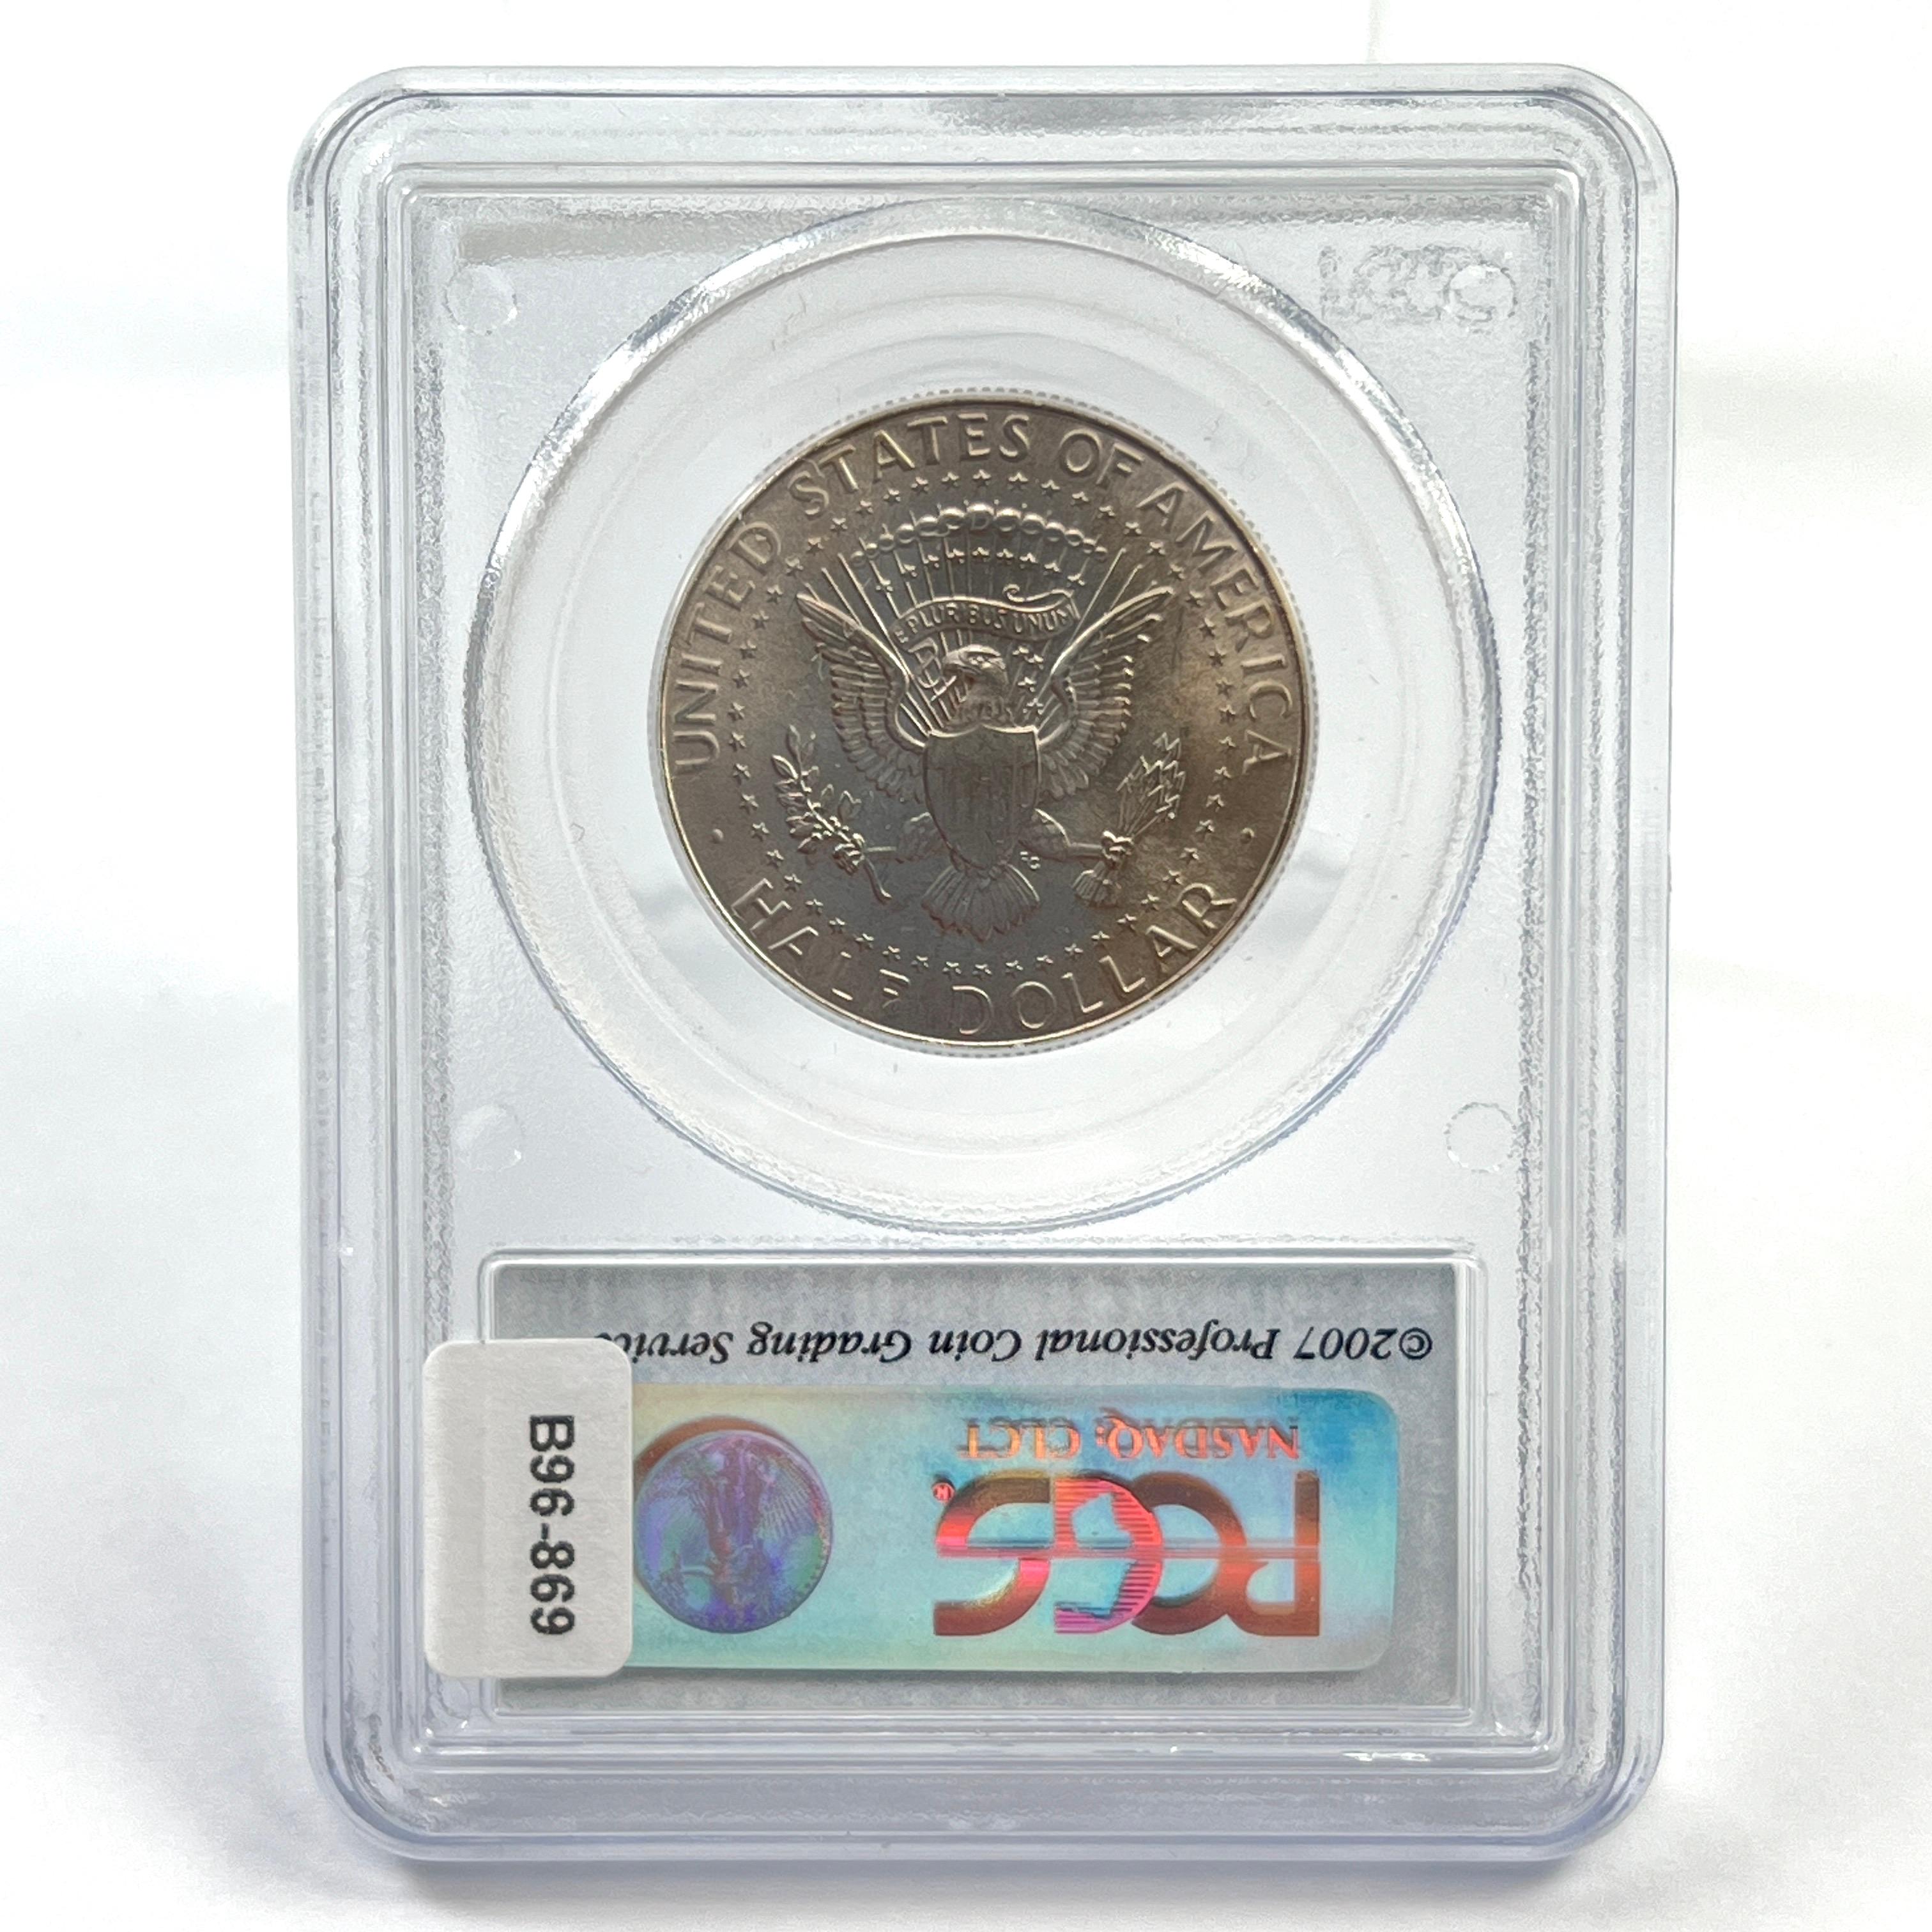 Certified 2007-D satin finish U.S. Kennedy half dollar